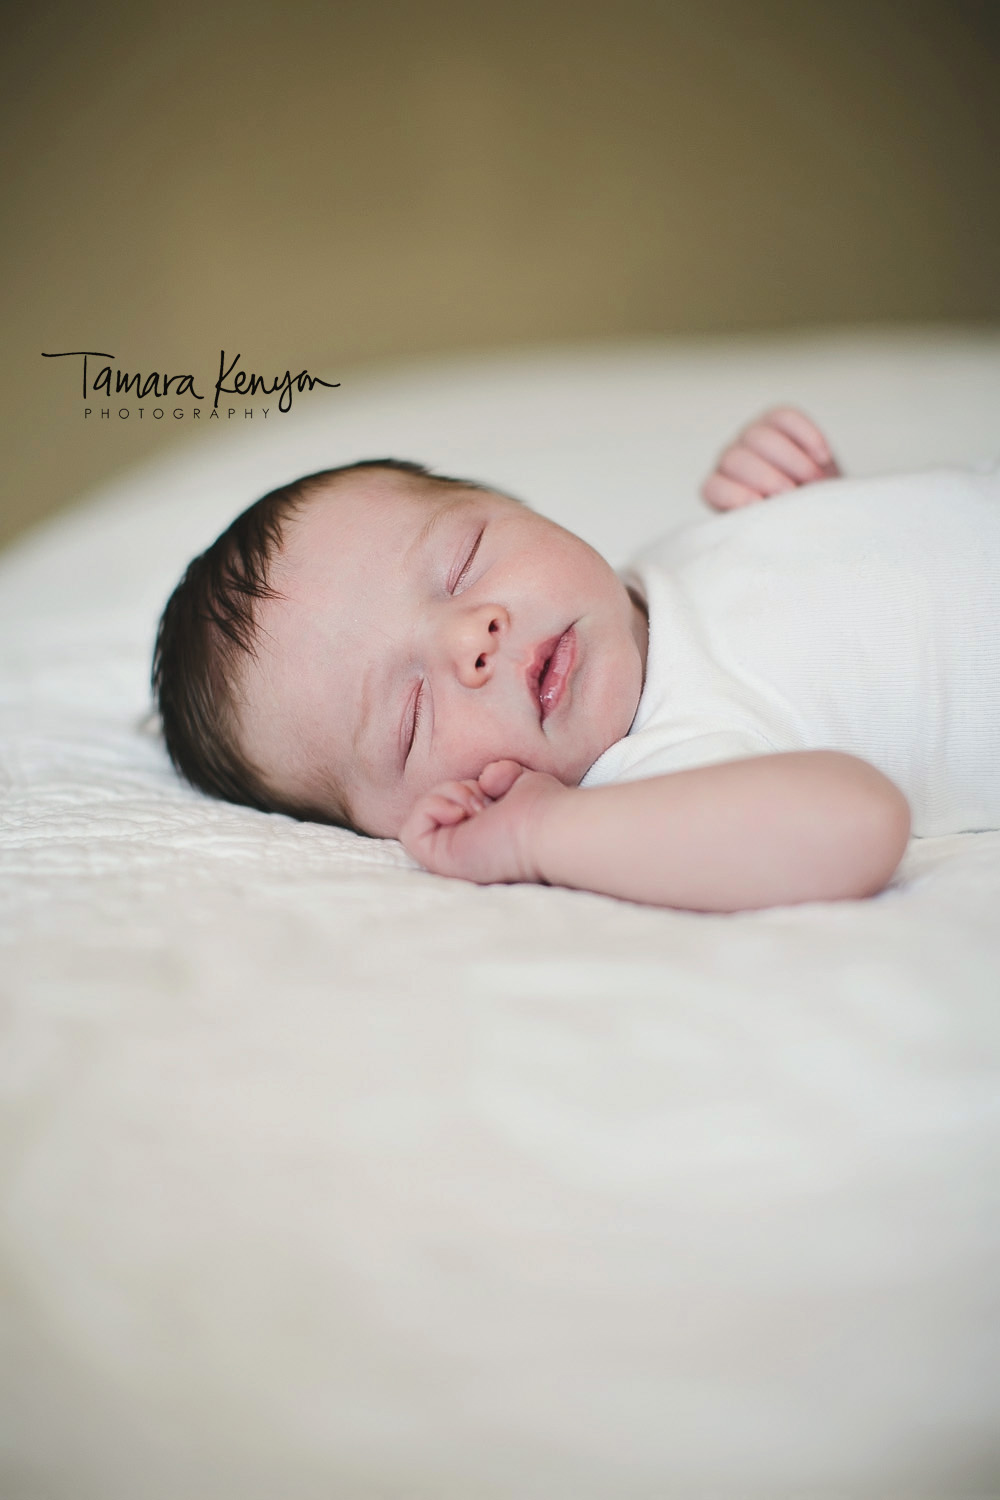 Newborn photography in boise